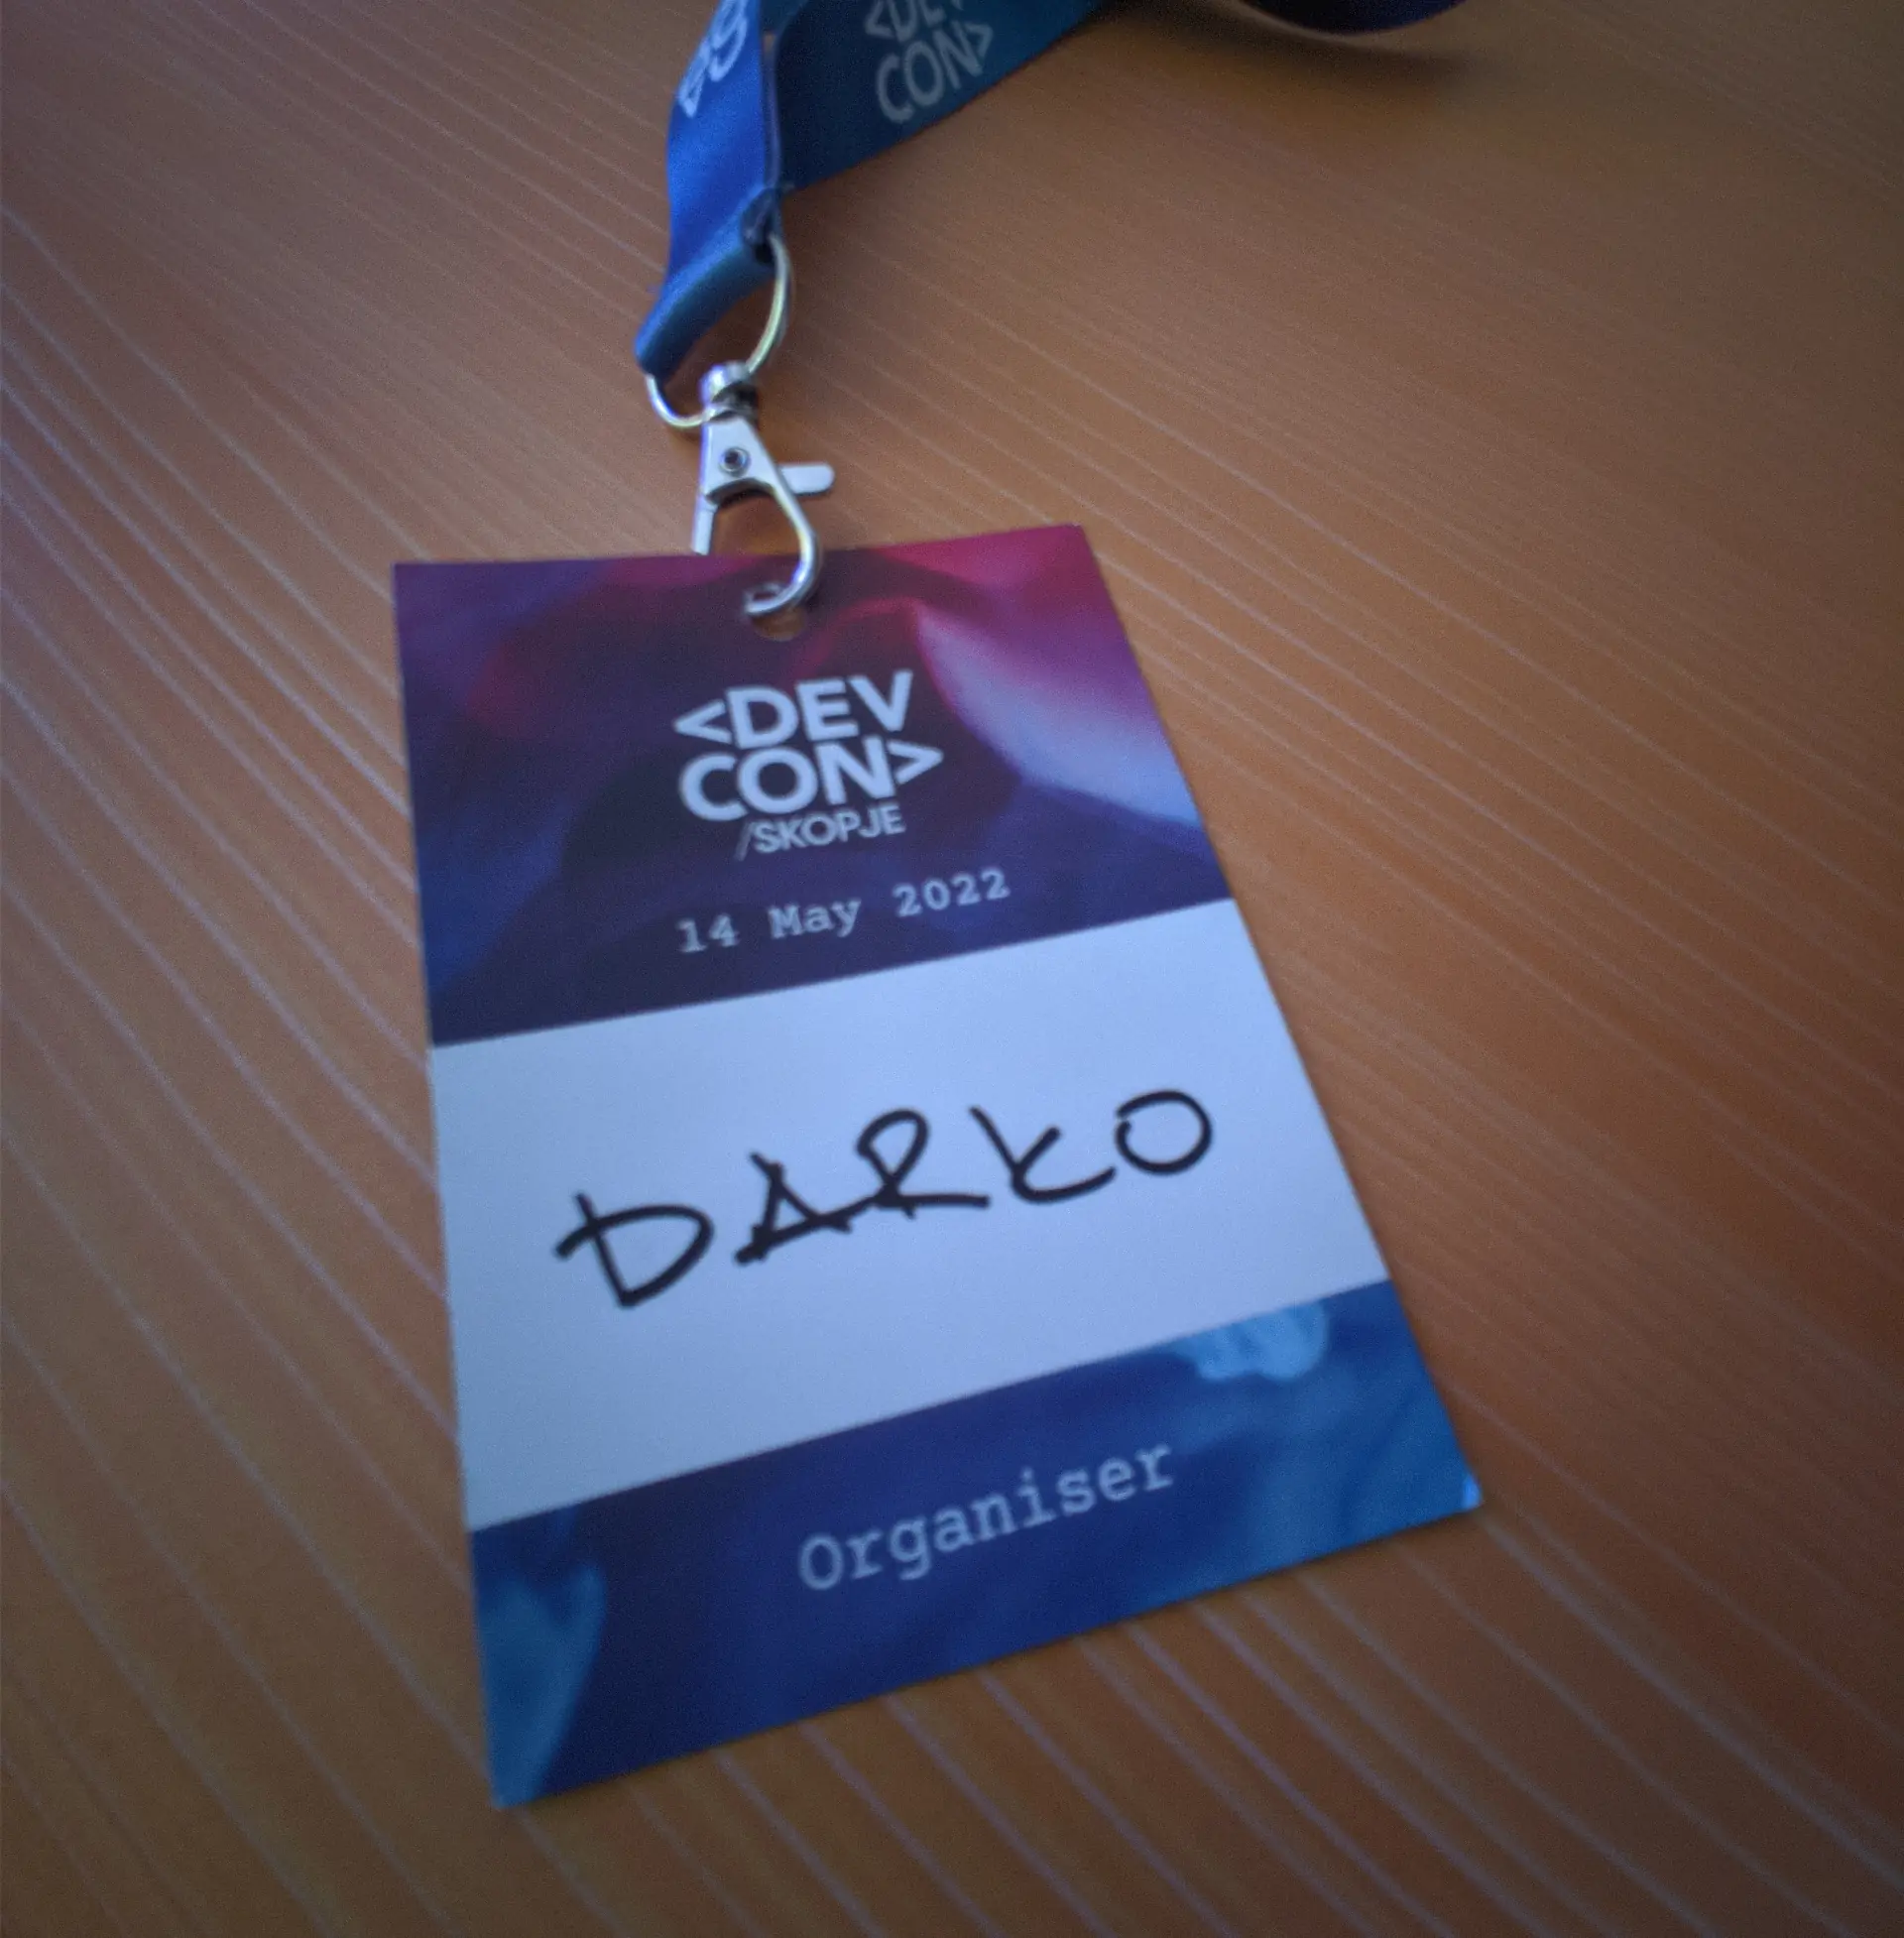 Swag corner stories - 2. The DevCon badge